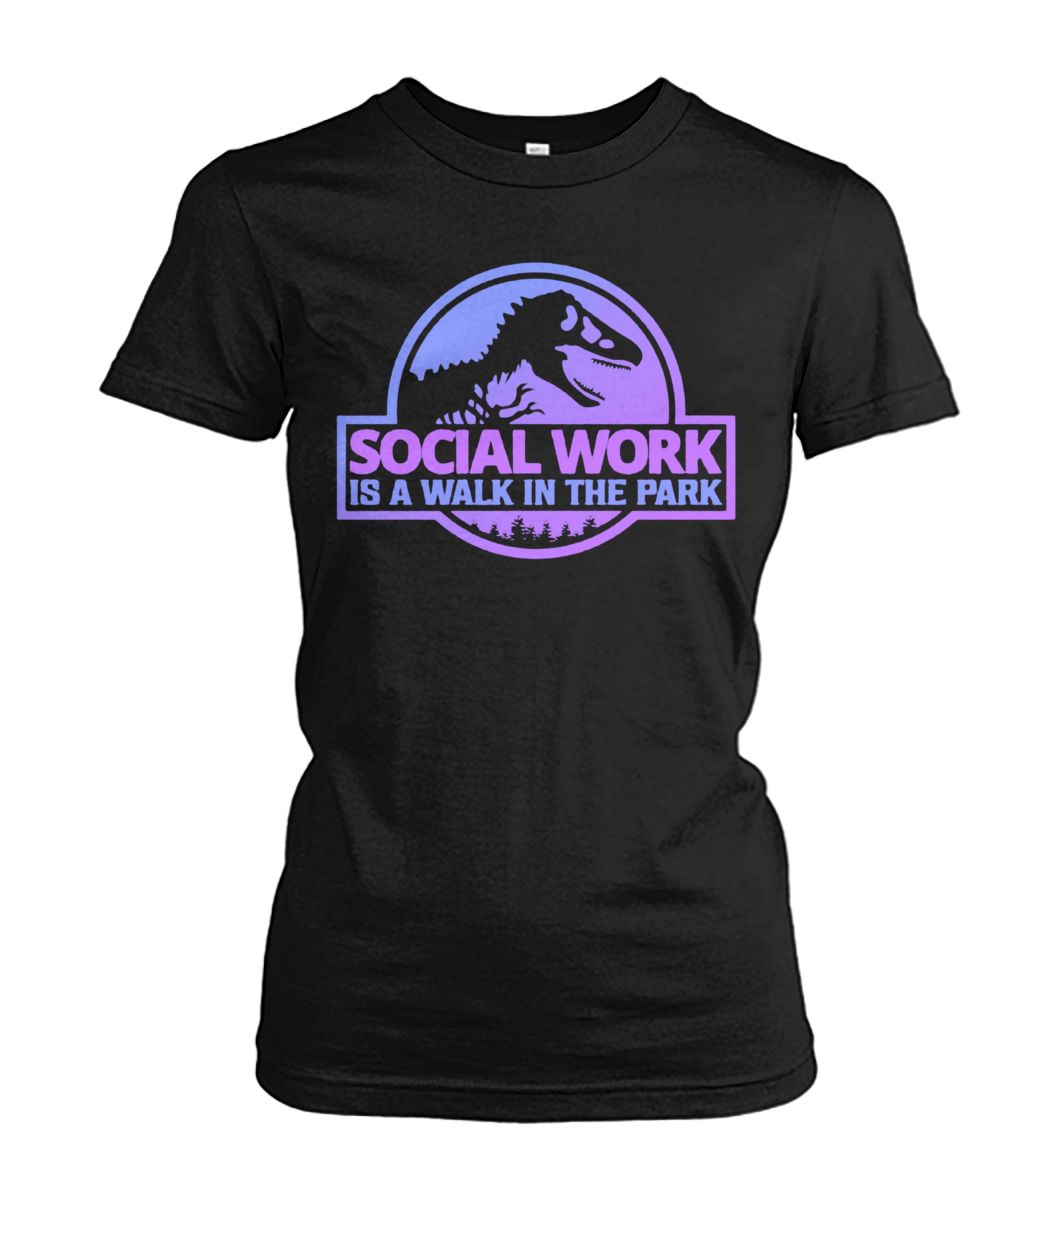 Jurassic social work is a walk in the park women's crew tee